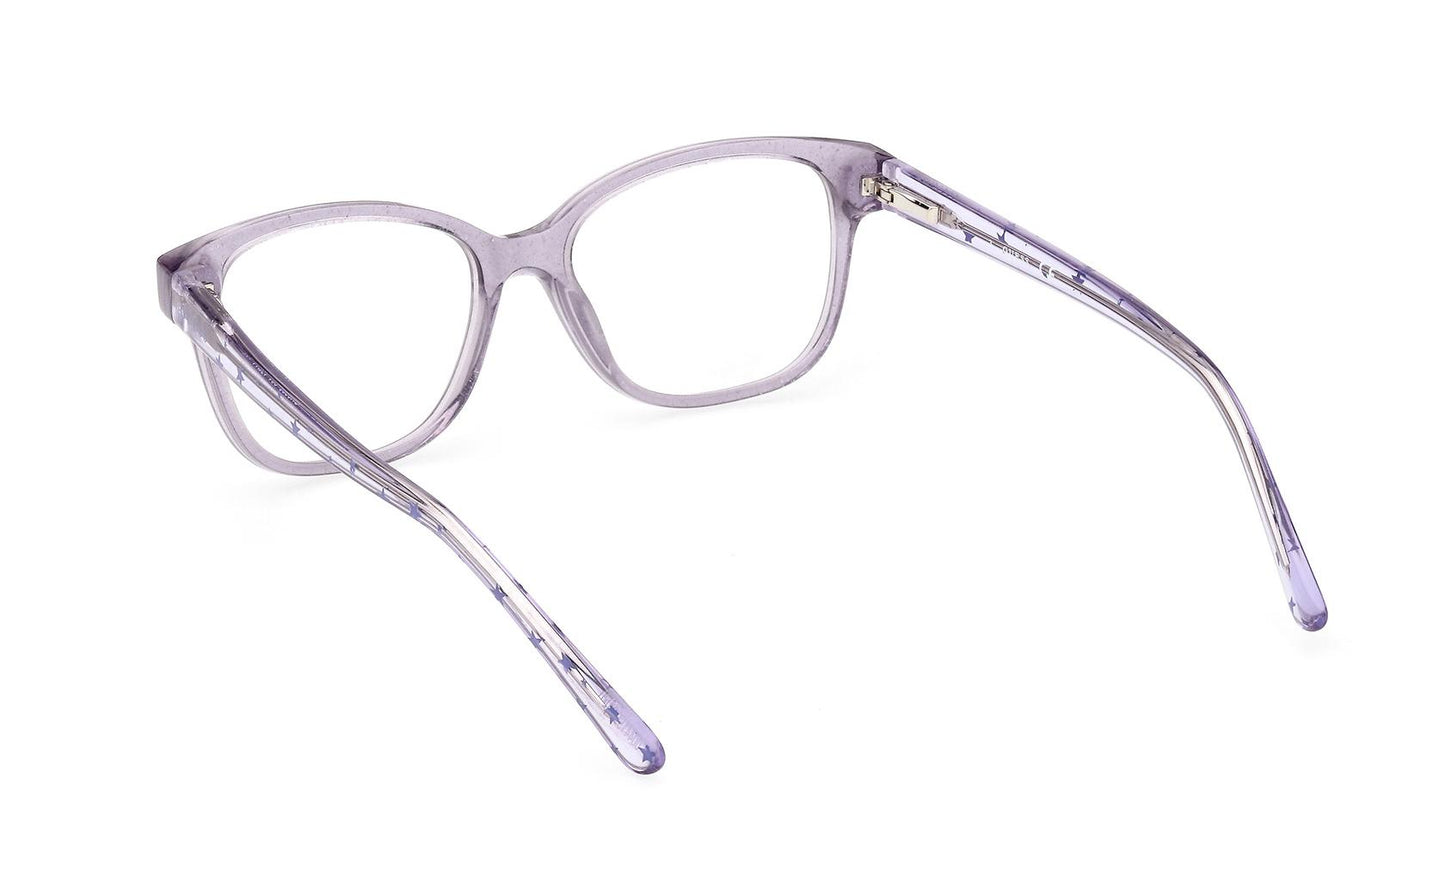 Guess Eyeglasses GU9225 081